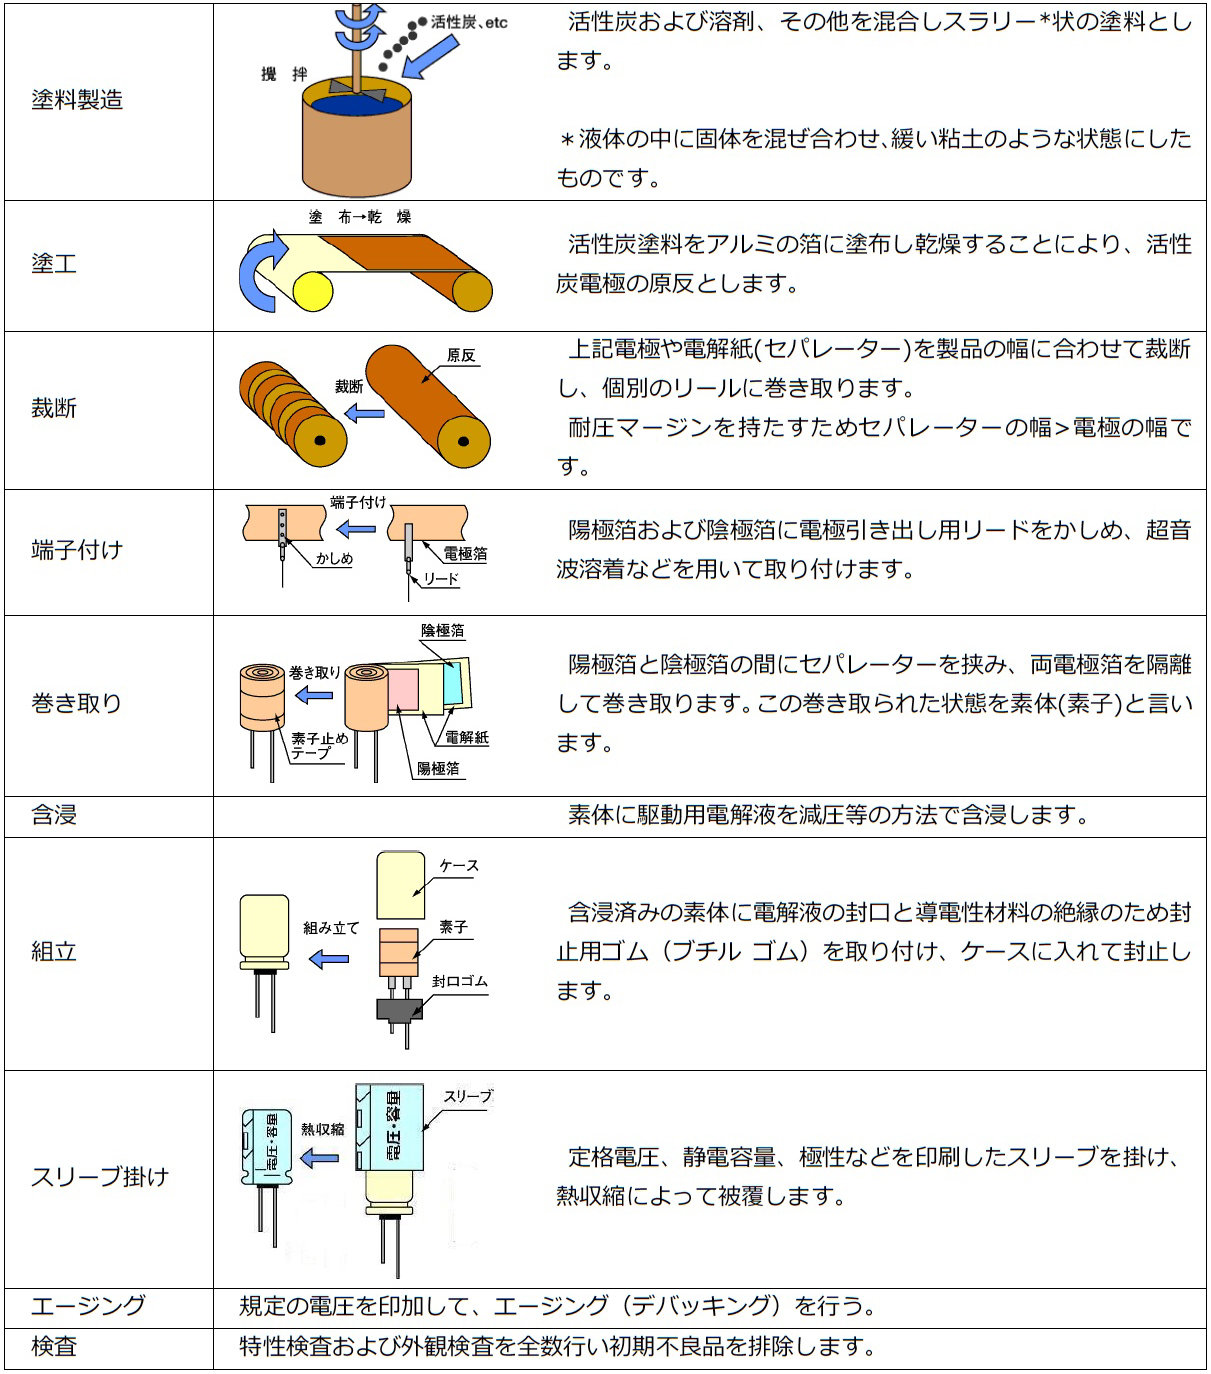 \2F`dCdwLpV^[̎ȐH iNbNŊgjQlFGi[ WebTCgmhttp://www.elna.co.jp/capacitor/double_layer/manufacture.htmln